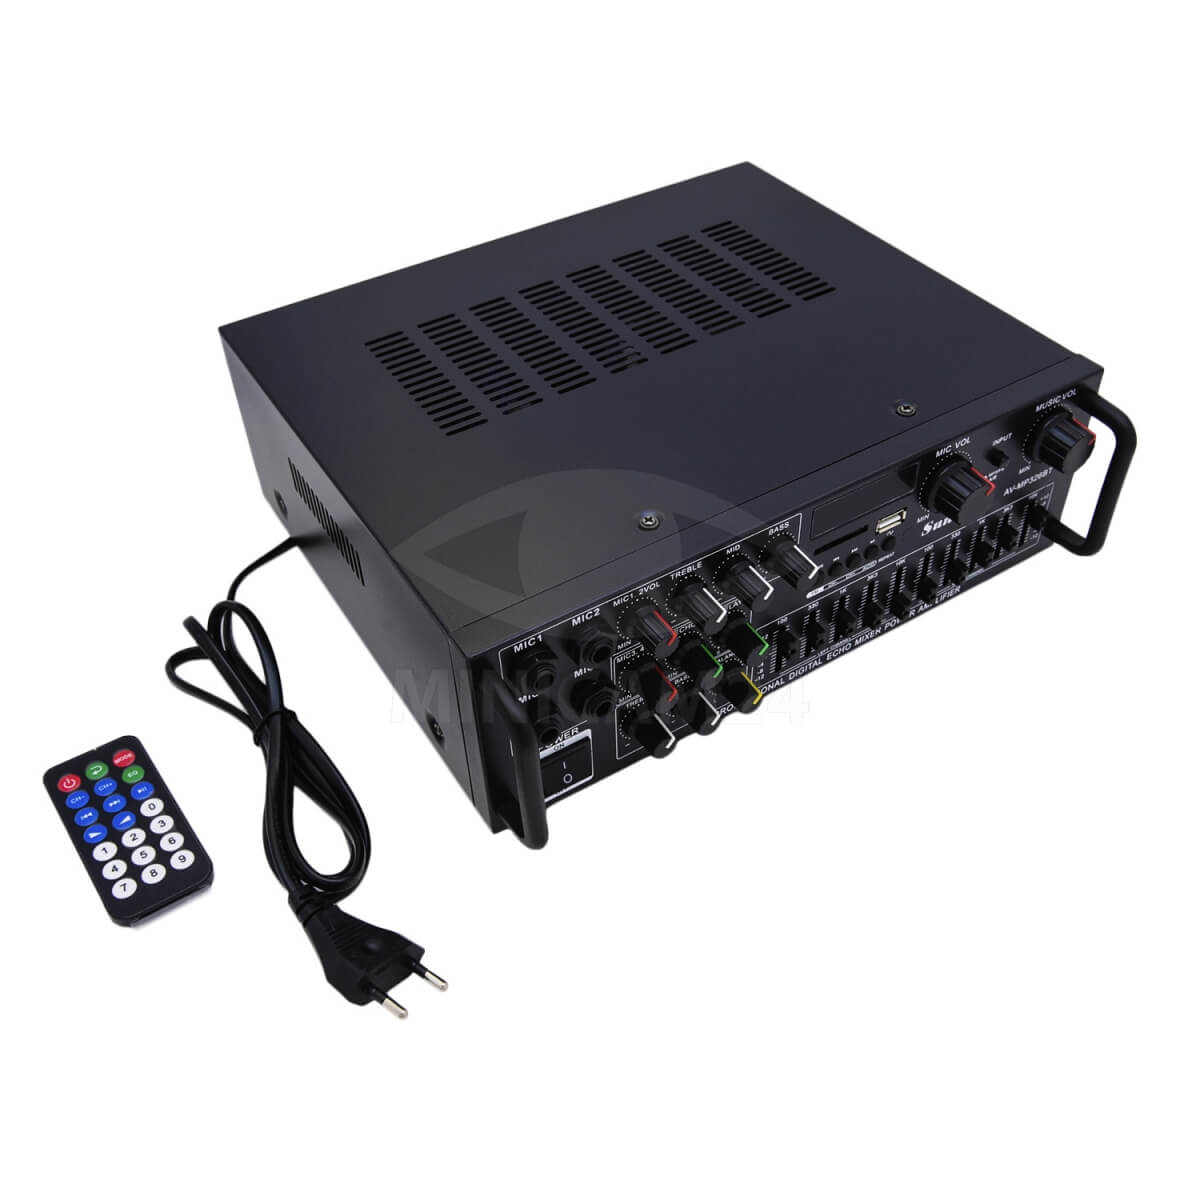 Unboxing Power Amplifier fleco av - mp326bt fitur Bluetooth Karaoke Sunbuck. Sunbuck av-mp326bt схема плат. Sunbuck av-mp326bt цена. Электронные схемы на бумаге для усилитель Sunbuck av-mp326bt. Av mp326bt